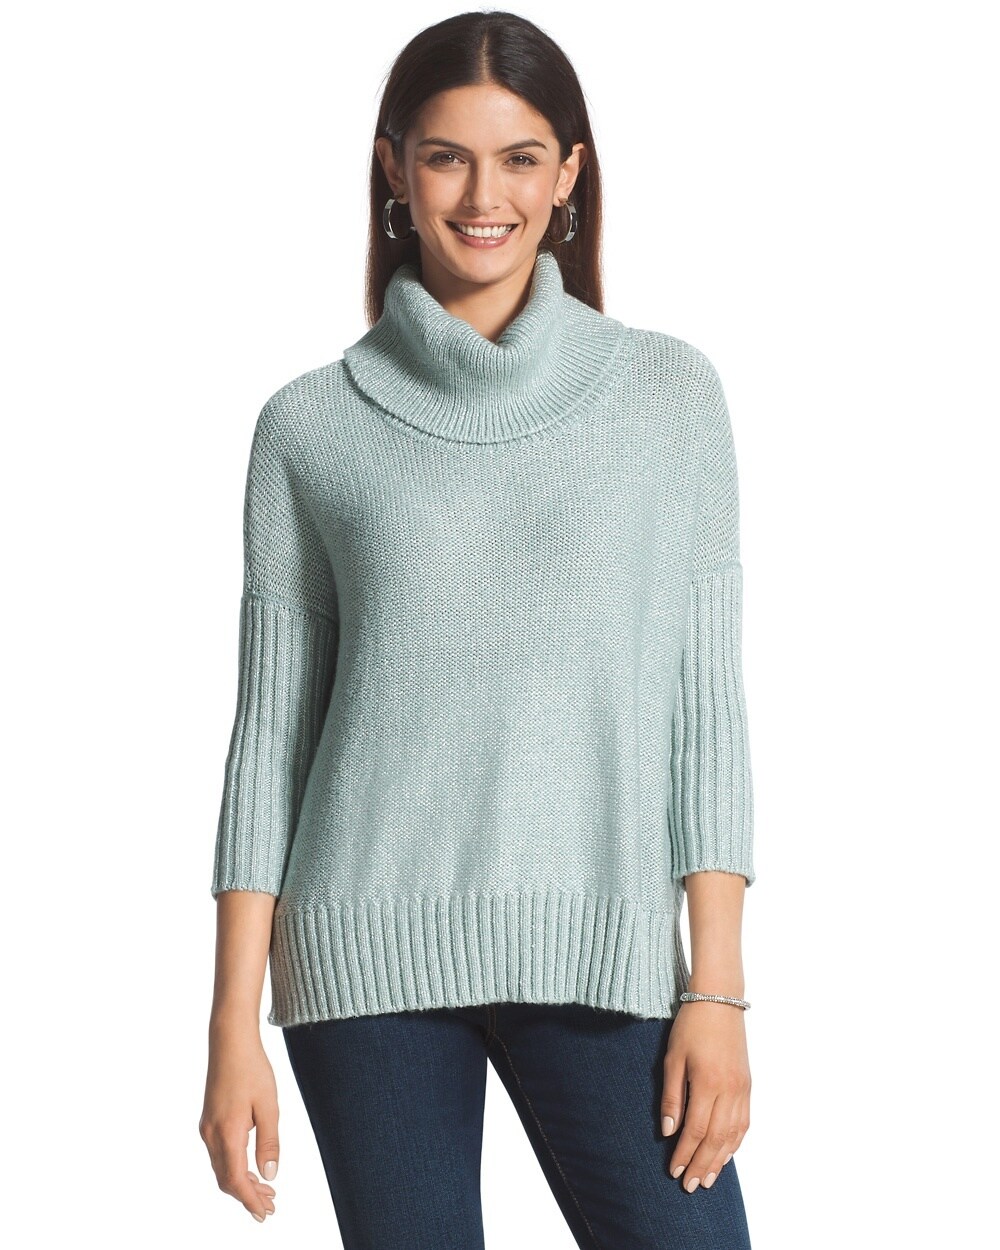 Celine Cowl Neck Sweater in Aquifer Green - Chicos